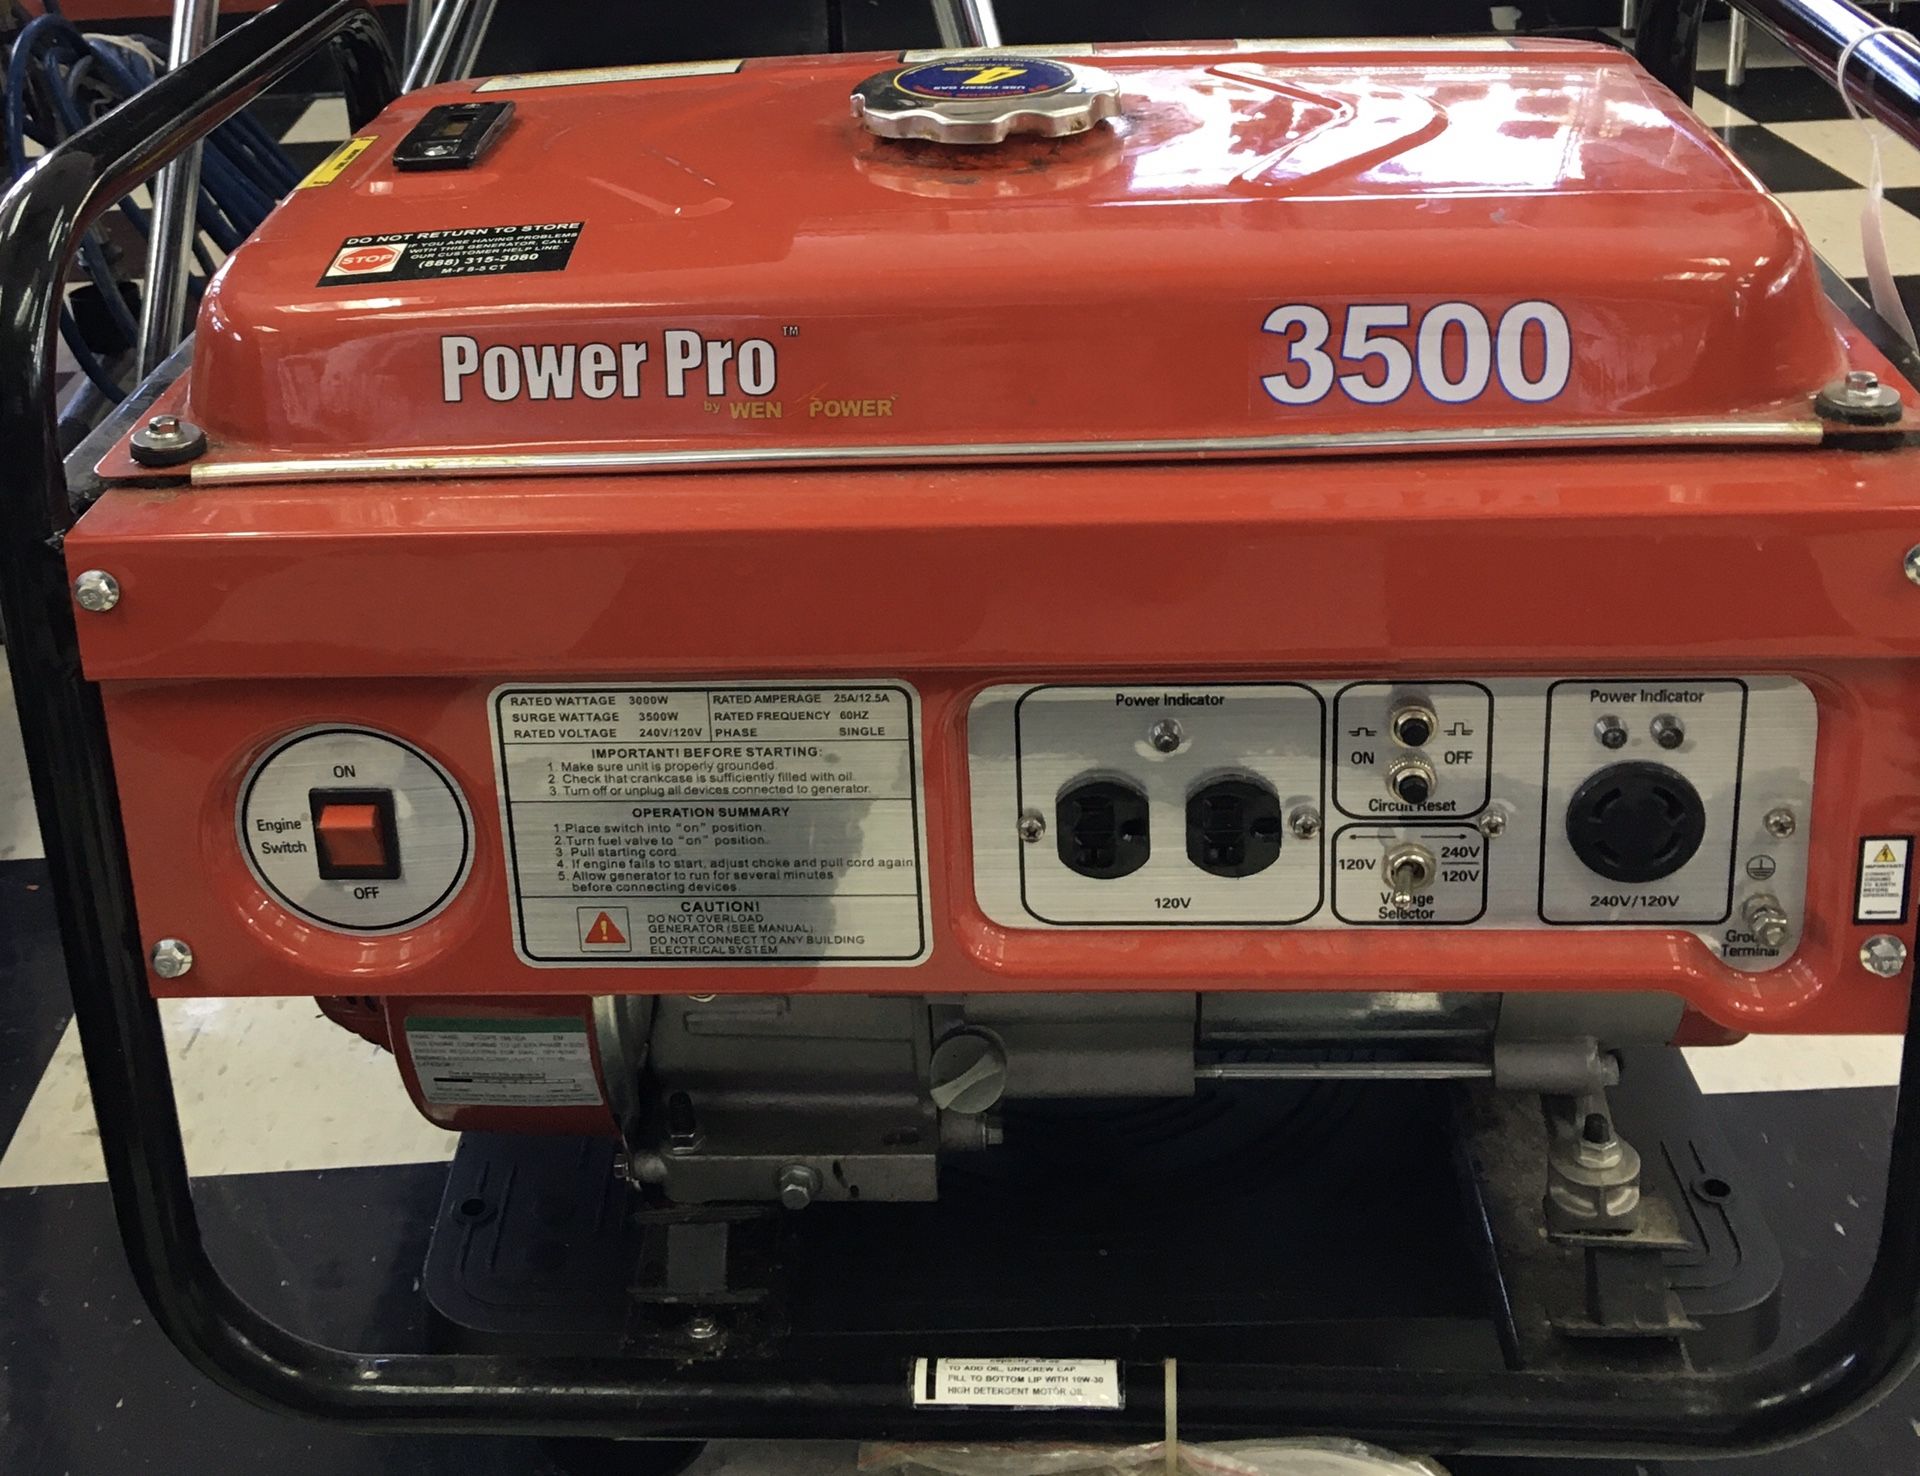 Power Pro 3500 Portable Electric Generator